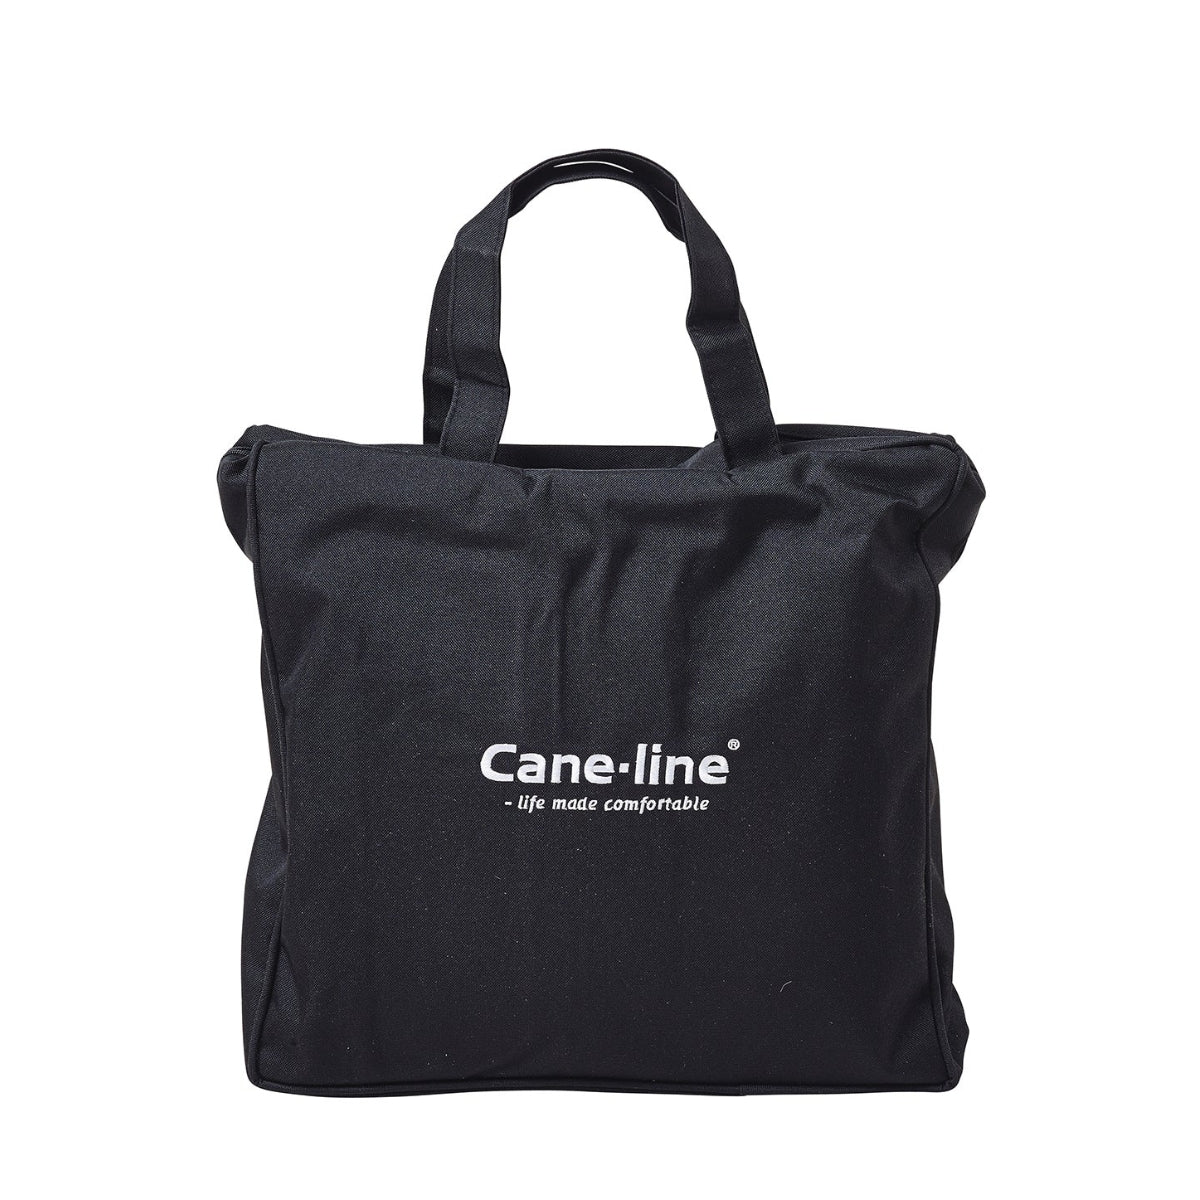 Cane-line | Cover 23 - Basket lounge chair/Strington 2-pers sofa